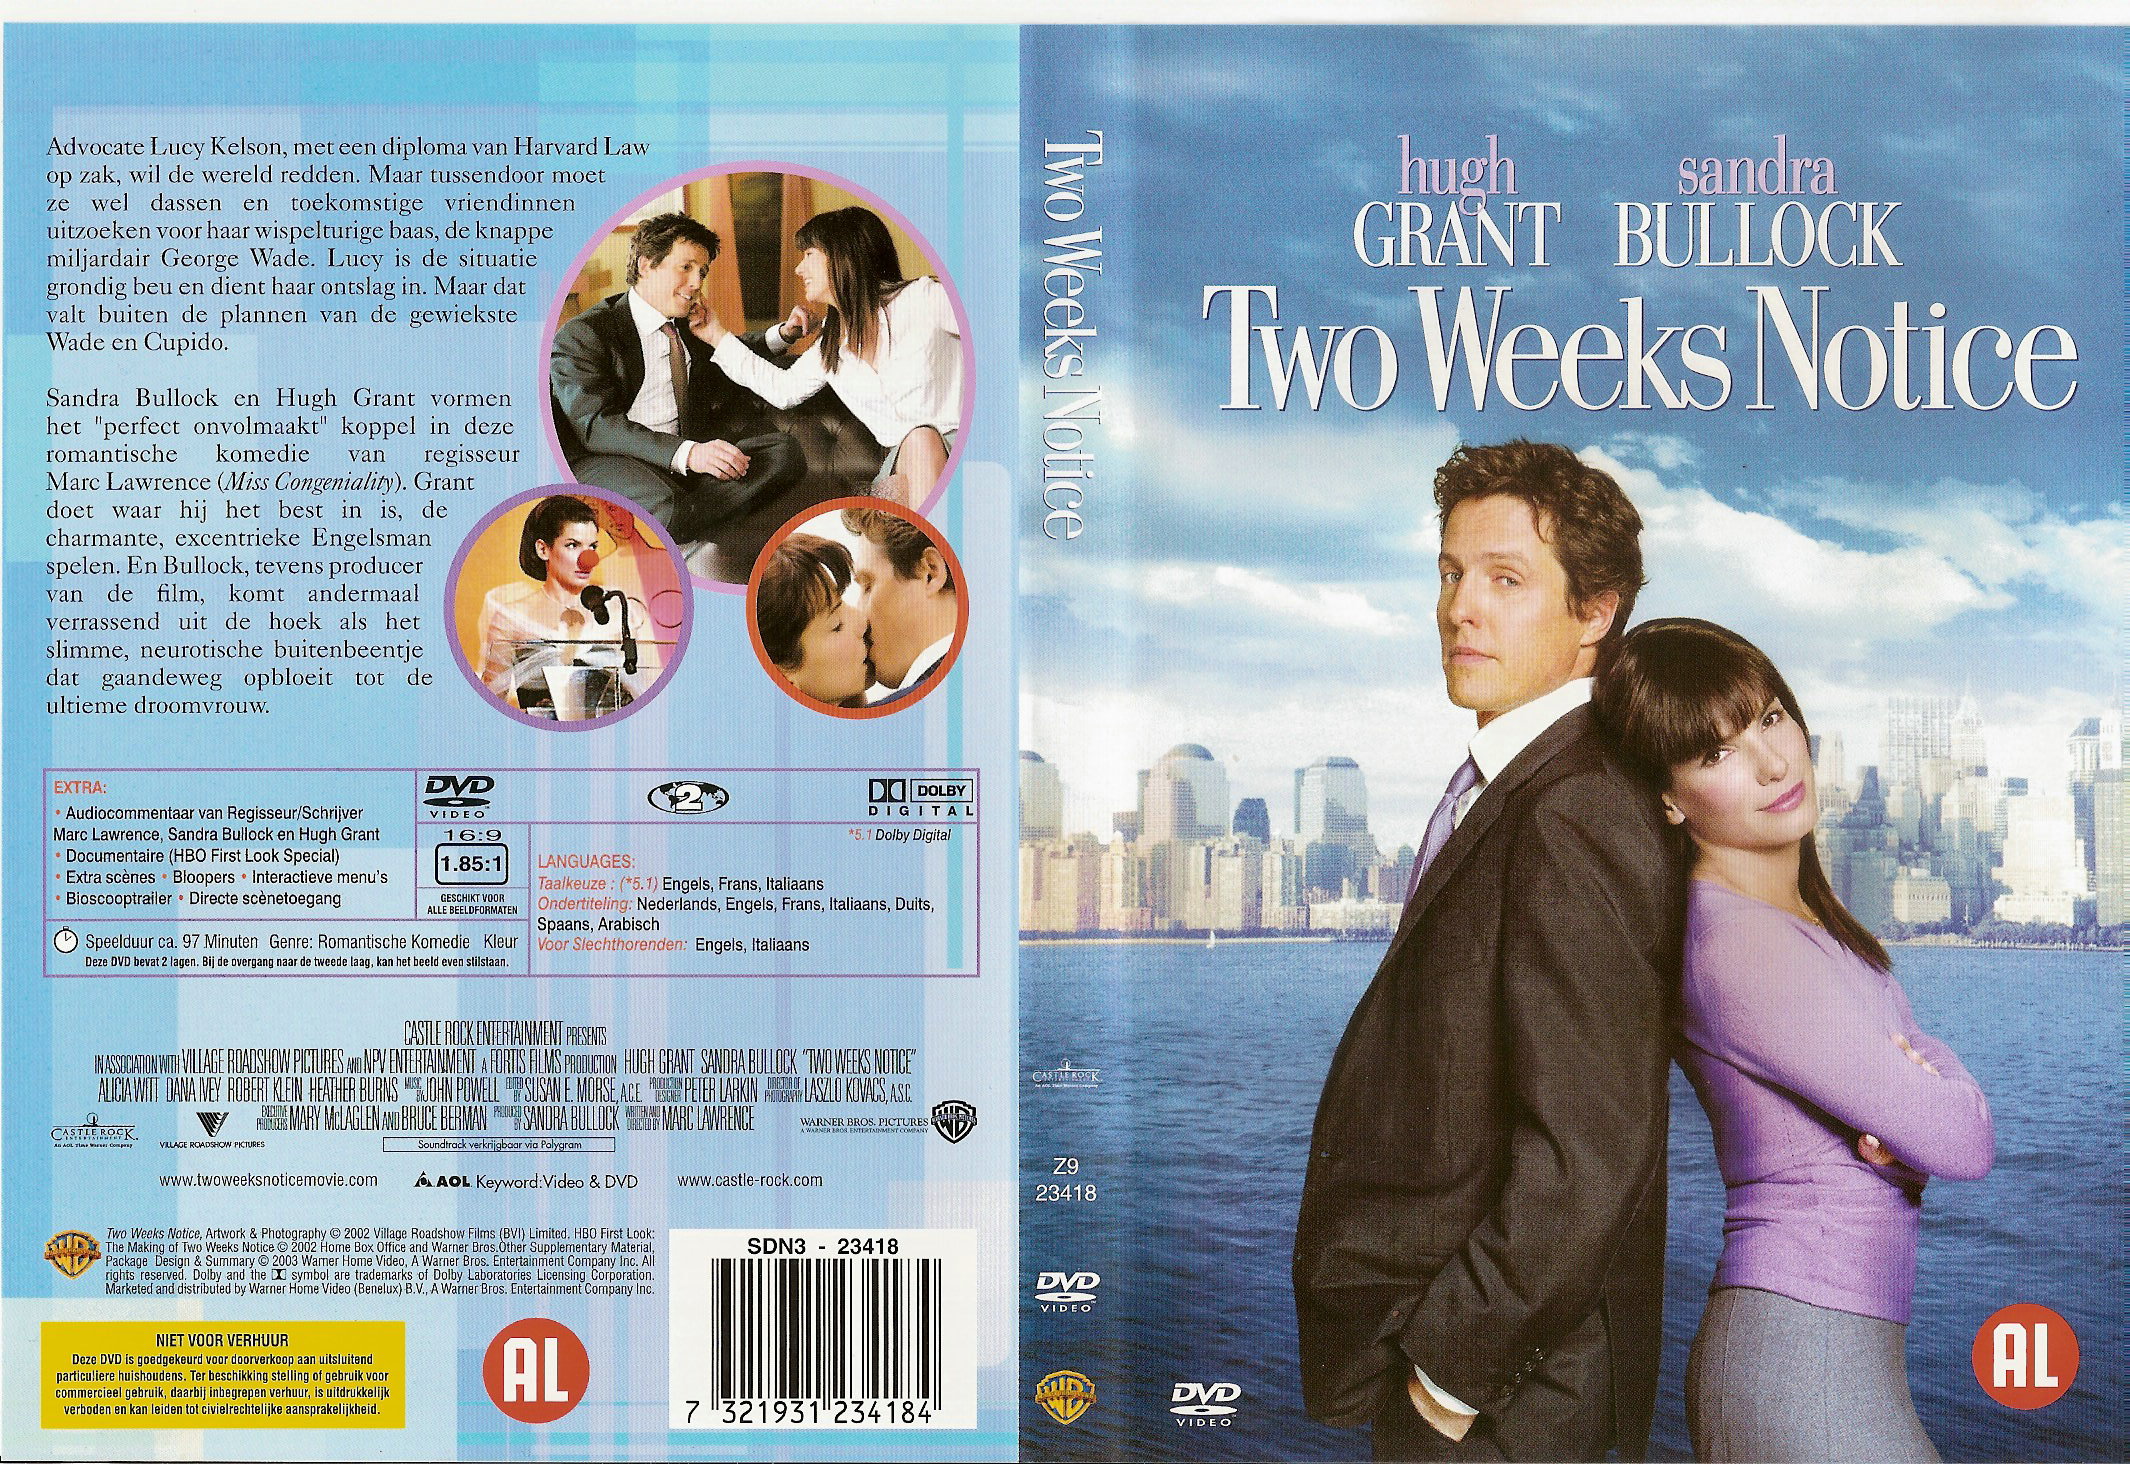 Two Weeks Notice (2002)Sandra Bullock